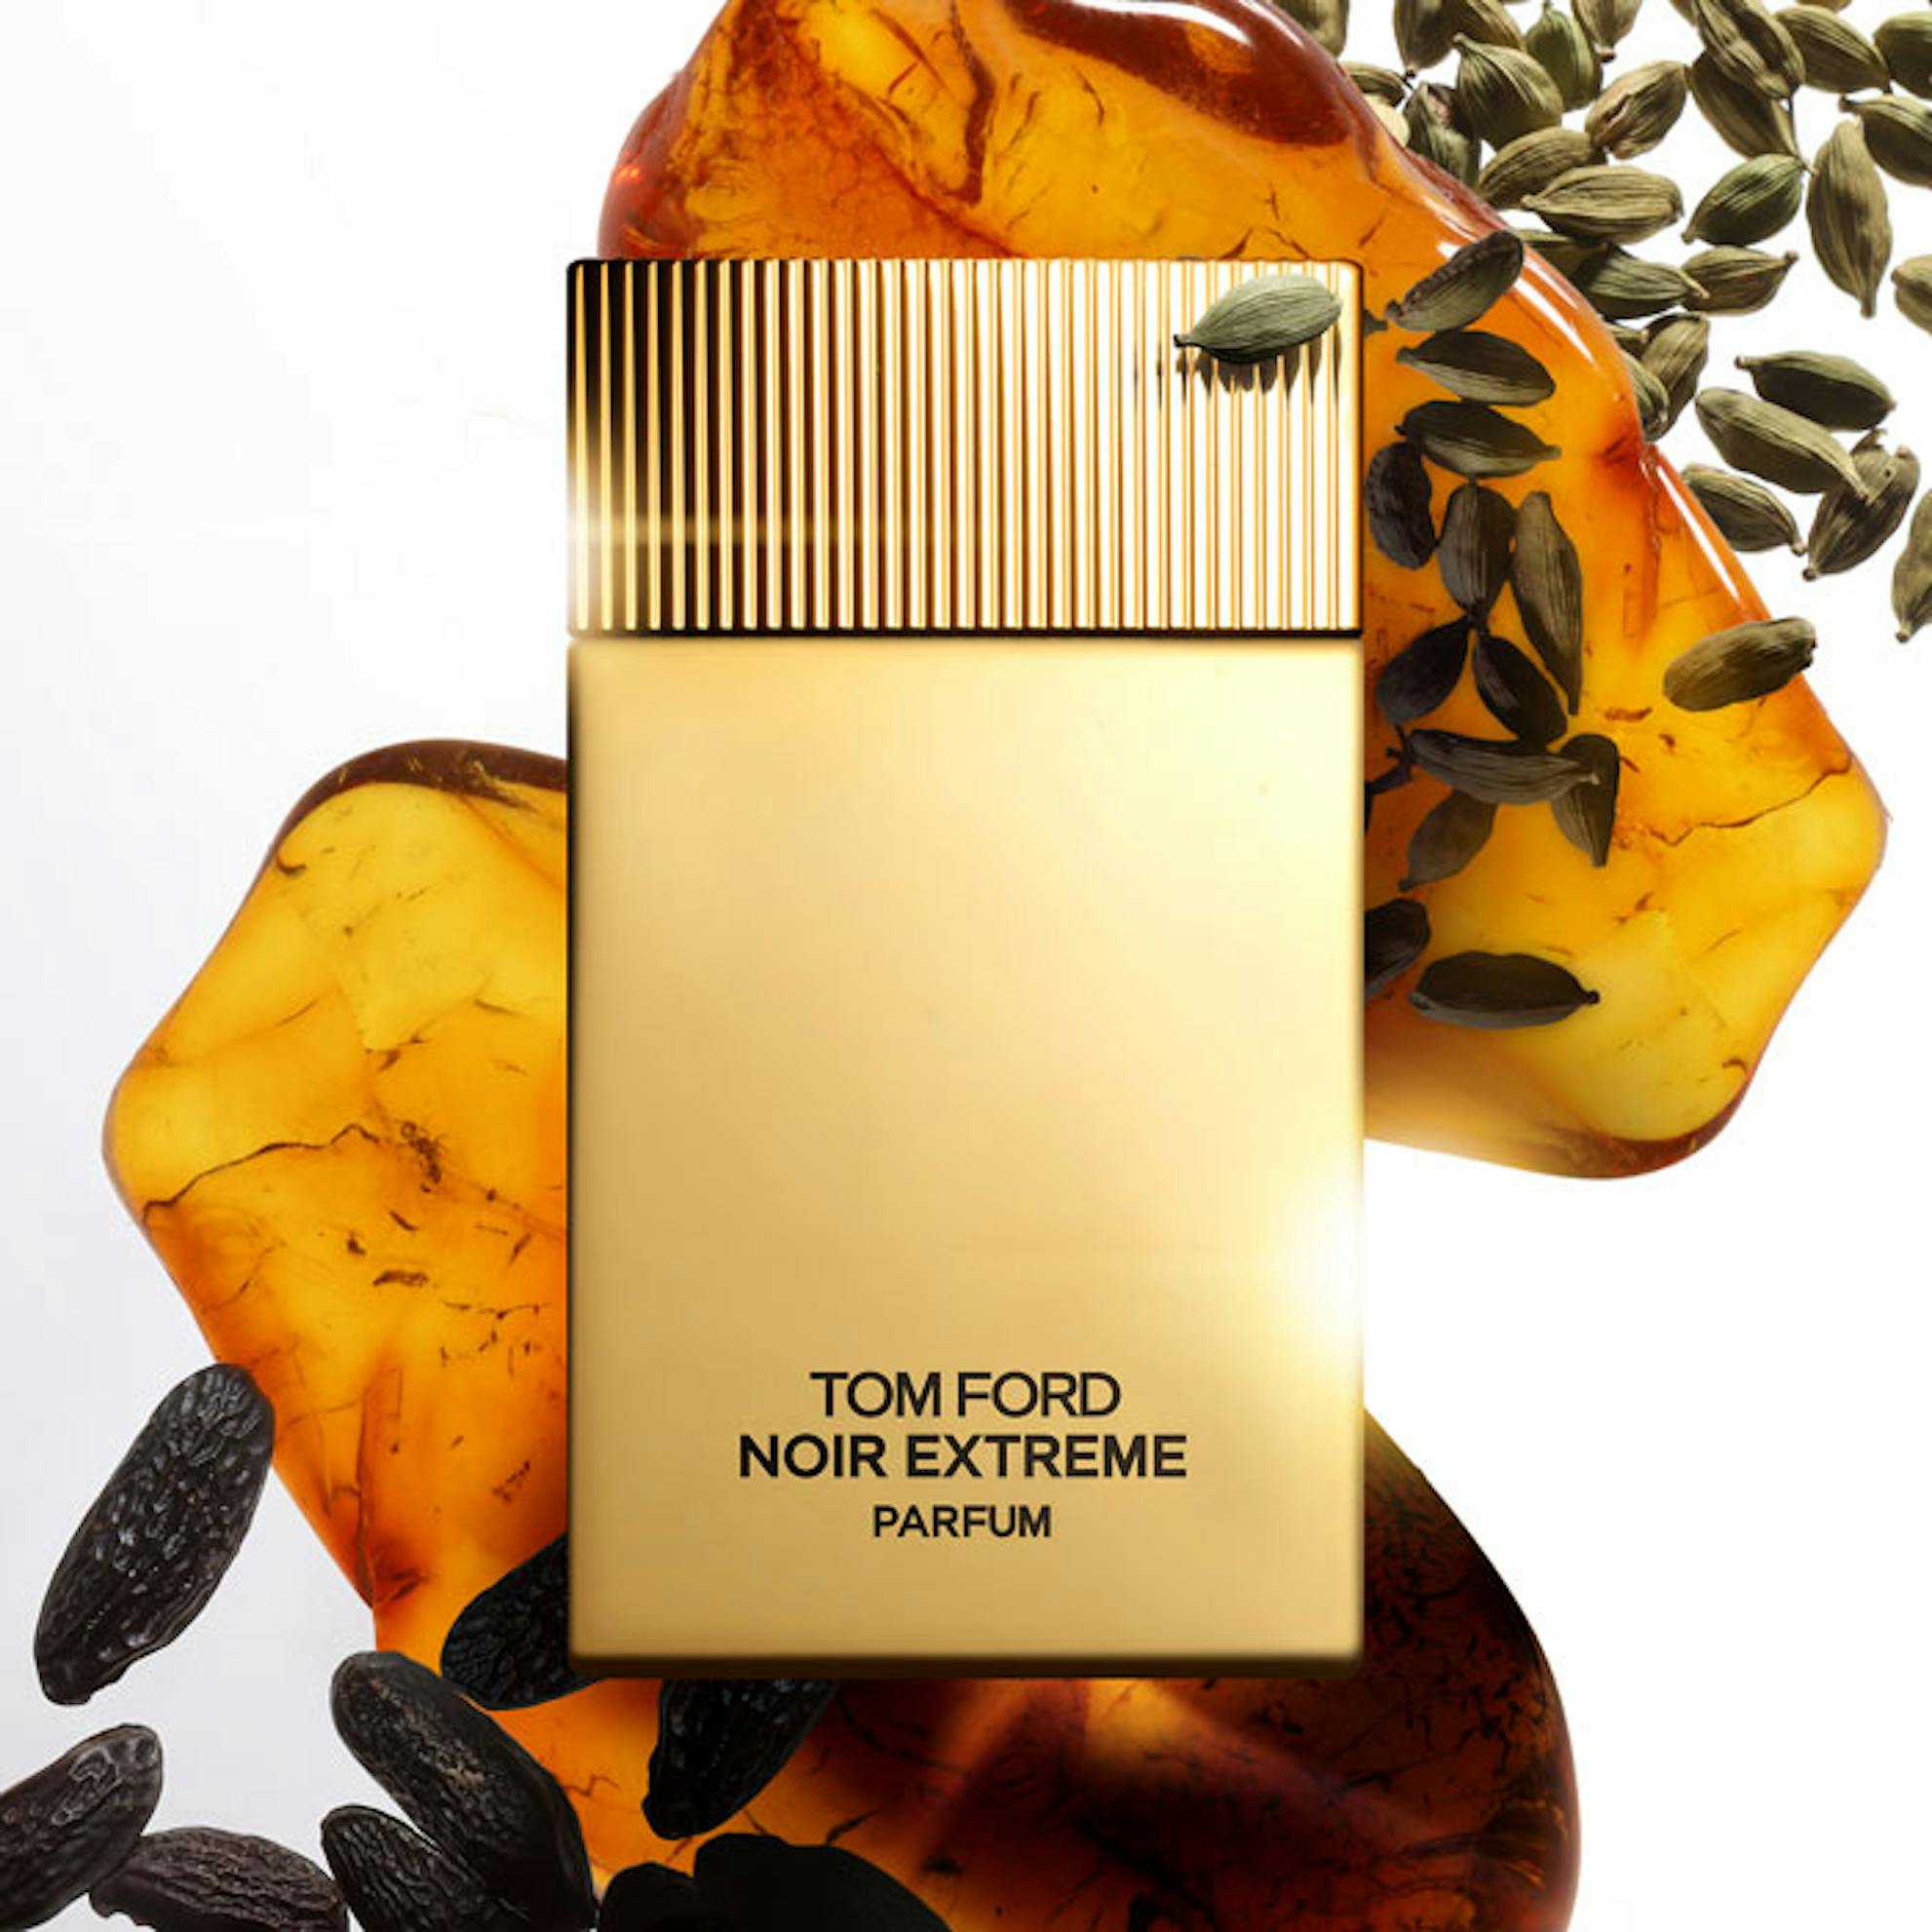 Tom Ford Noir Extreme Parfum 50ml Spray | The Fragrance Shop